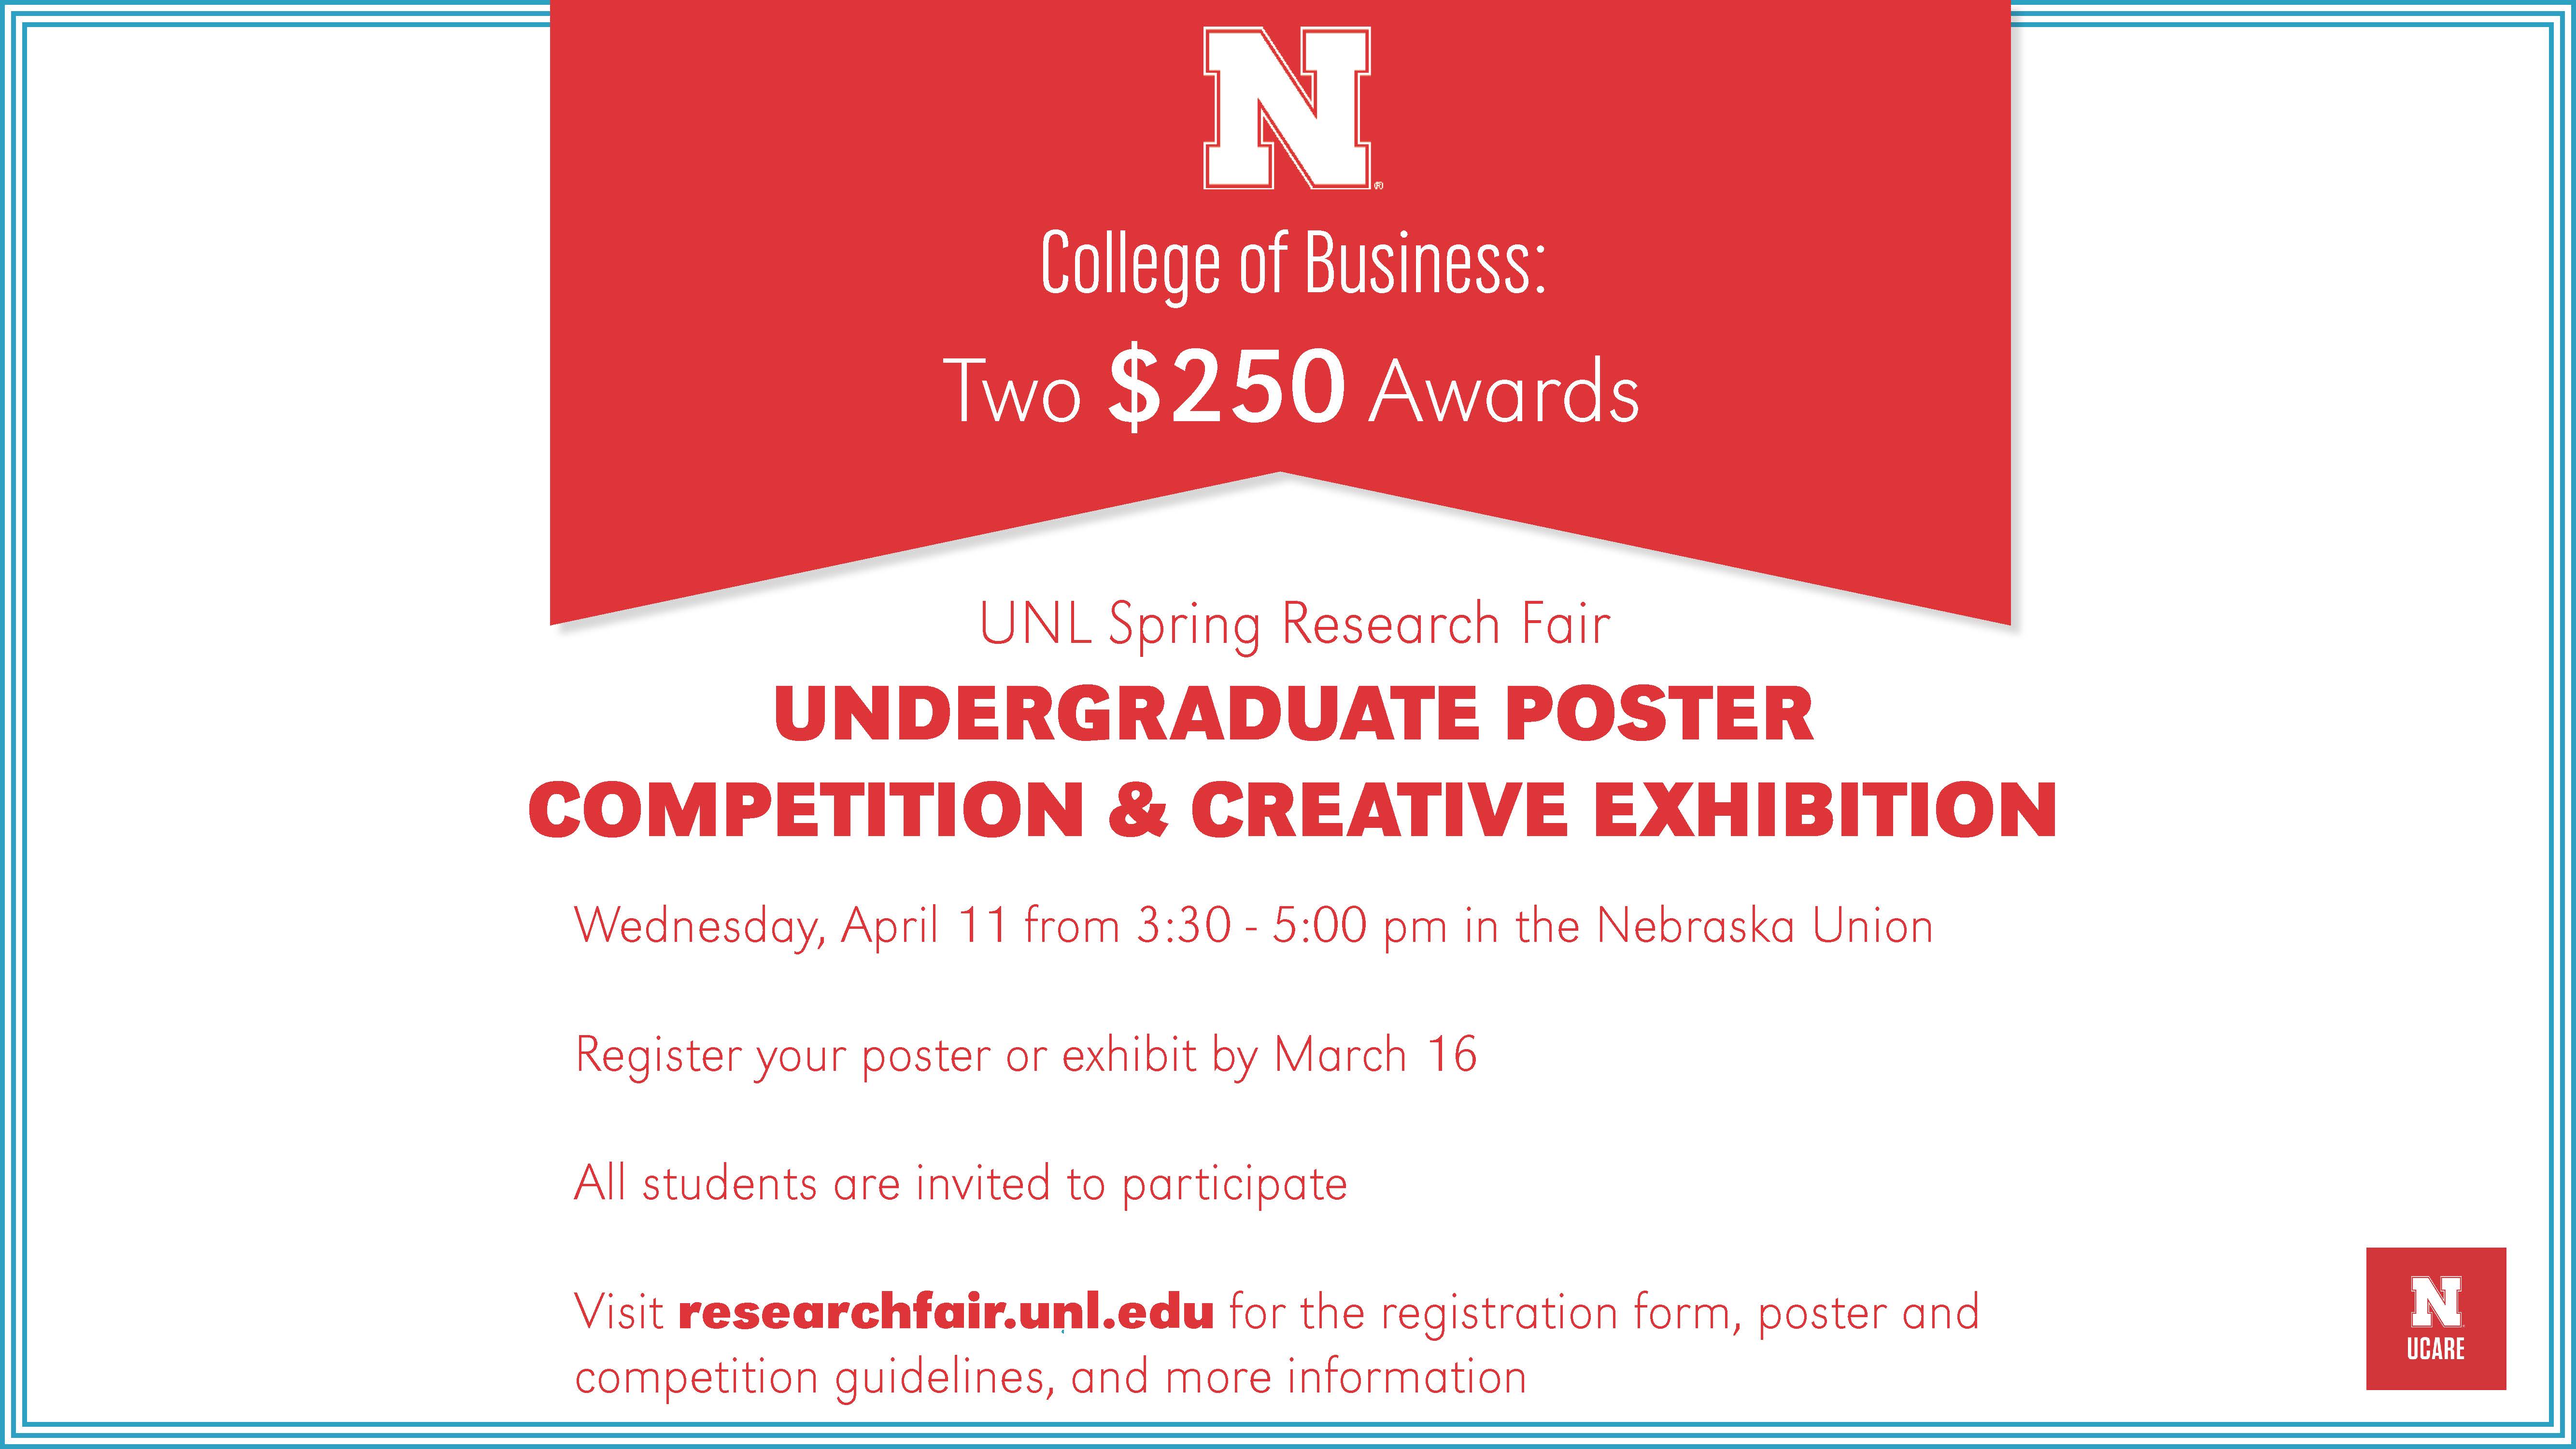 Undergraduate Poster Competition & Creative Exhibition